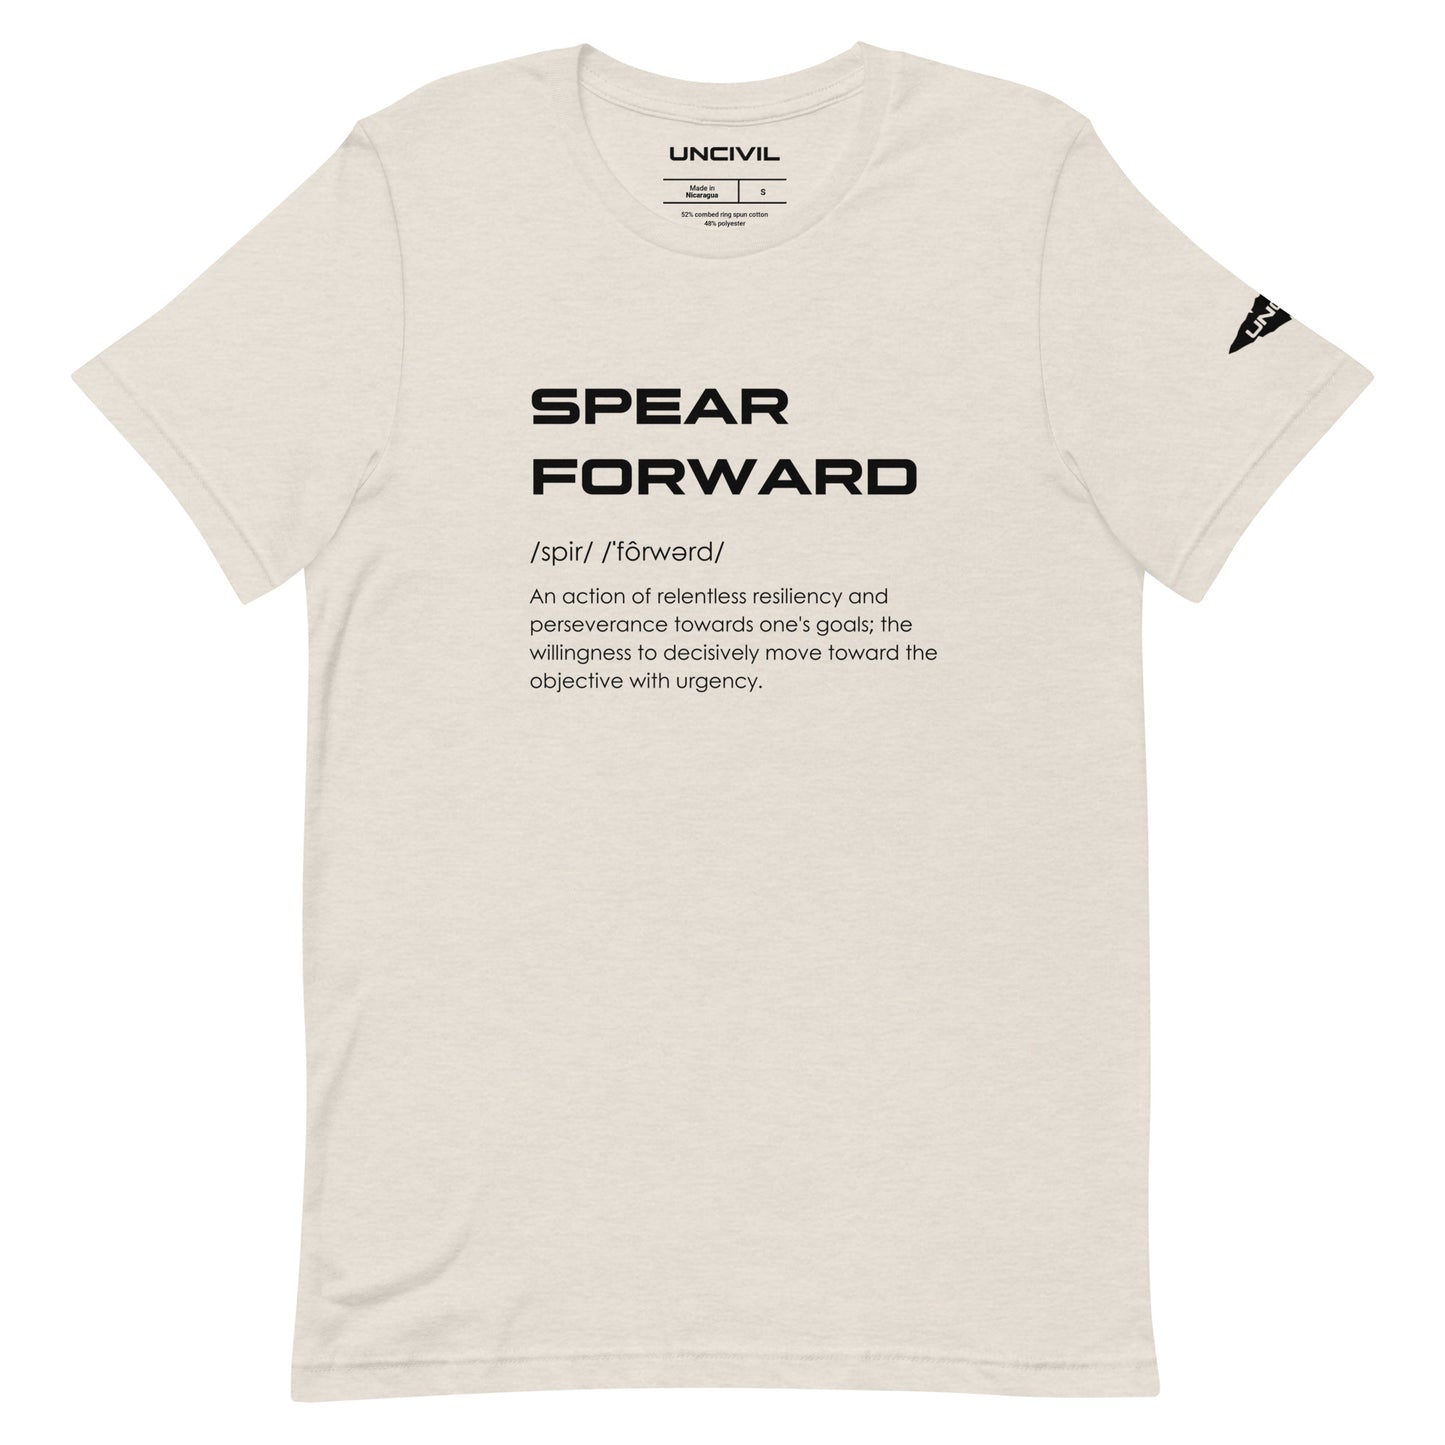 SPEAR Forward definition UNCIVIL heather dust shirt